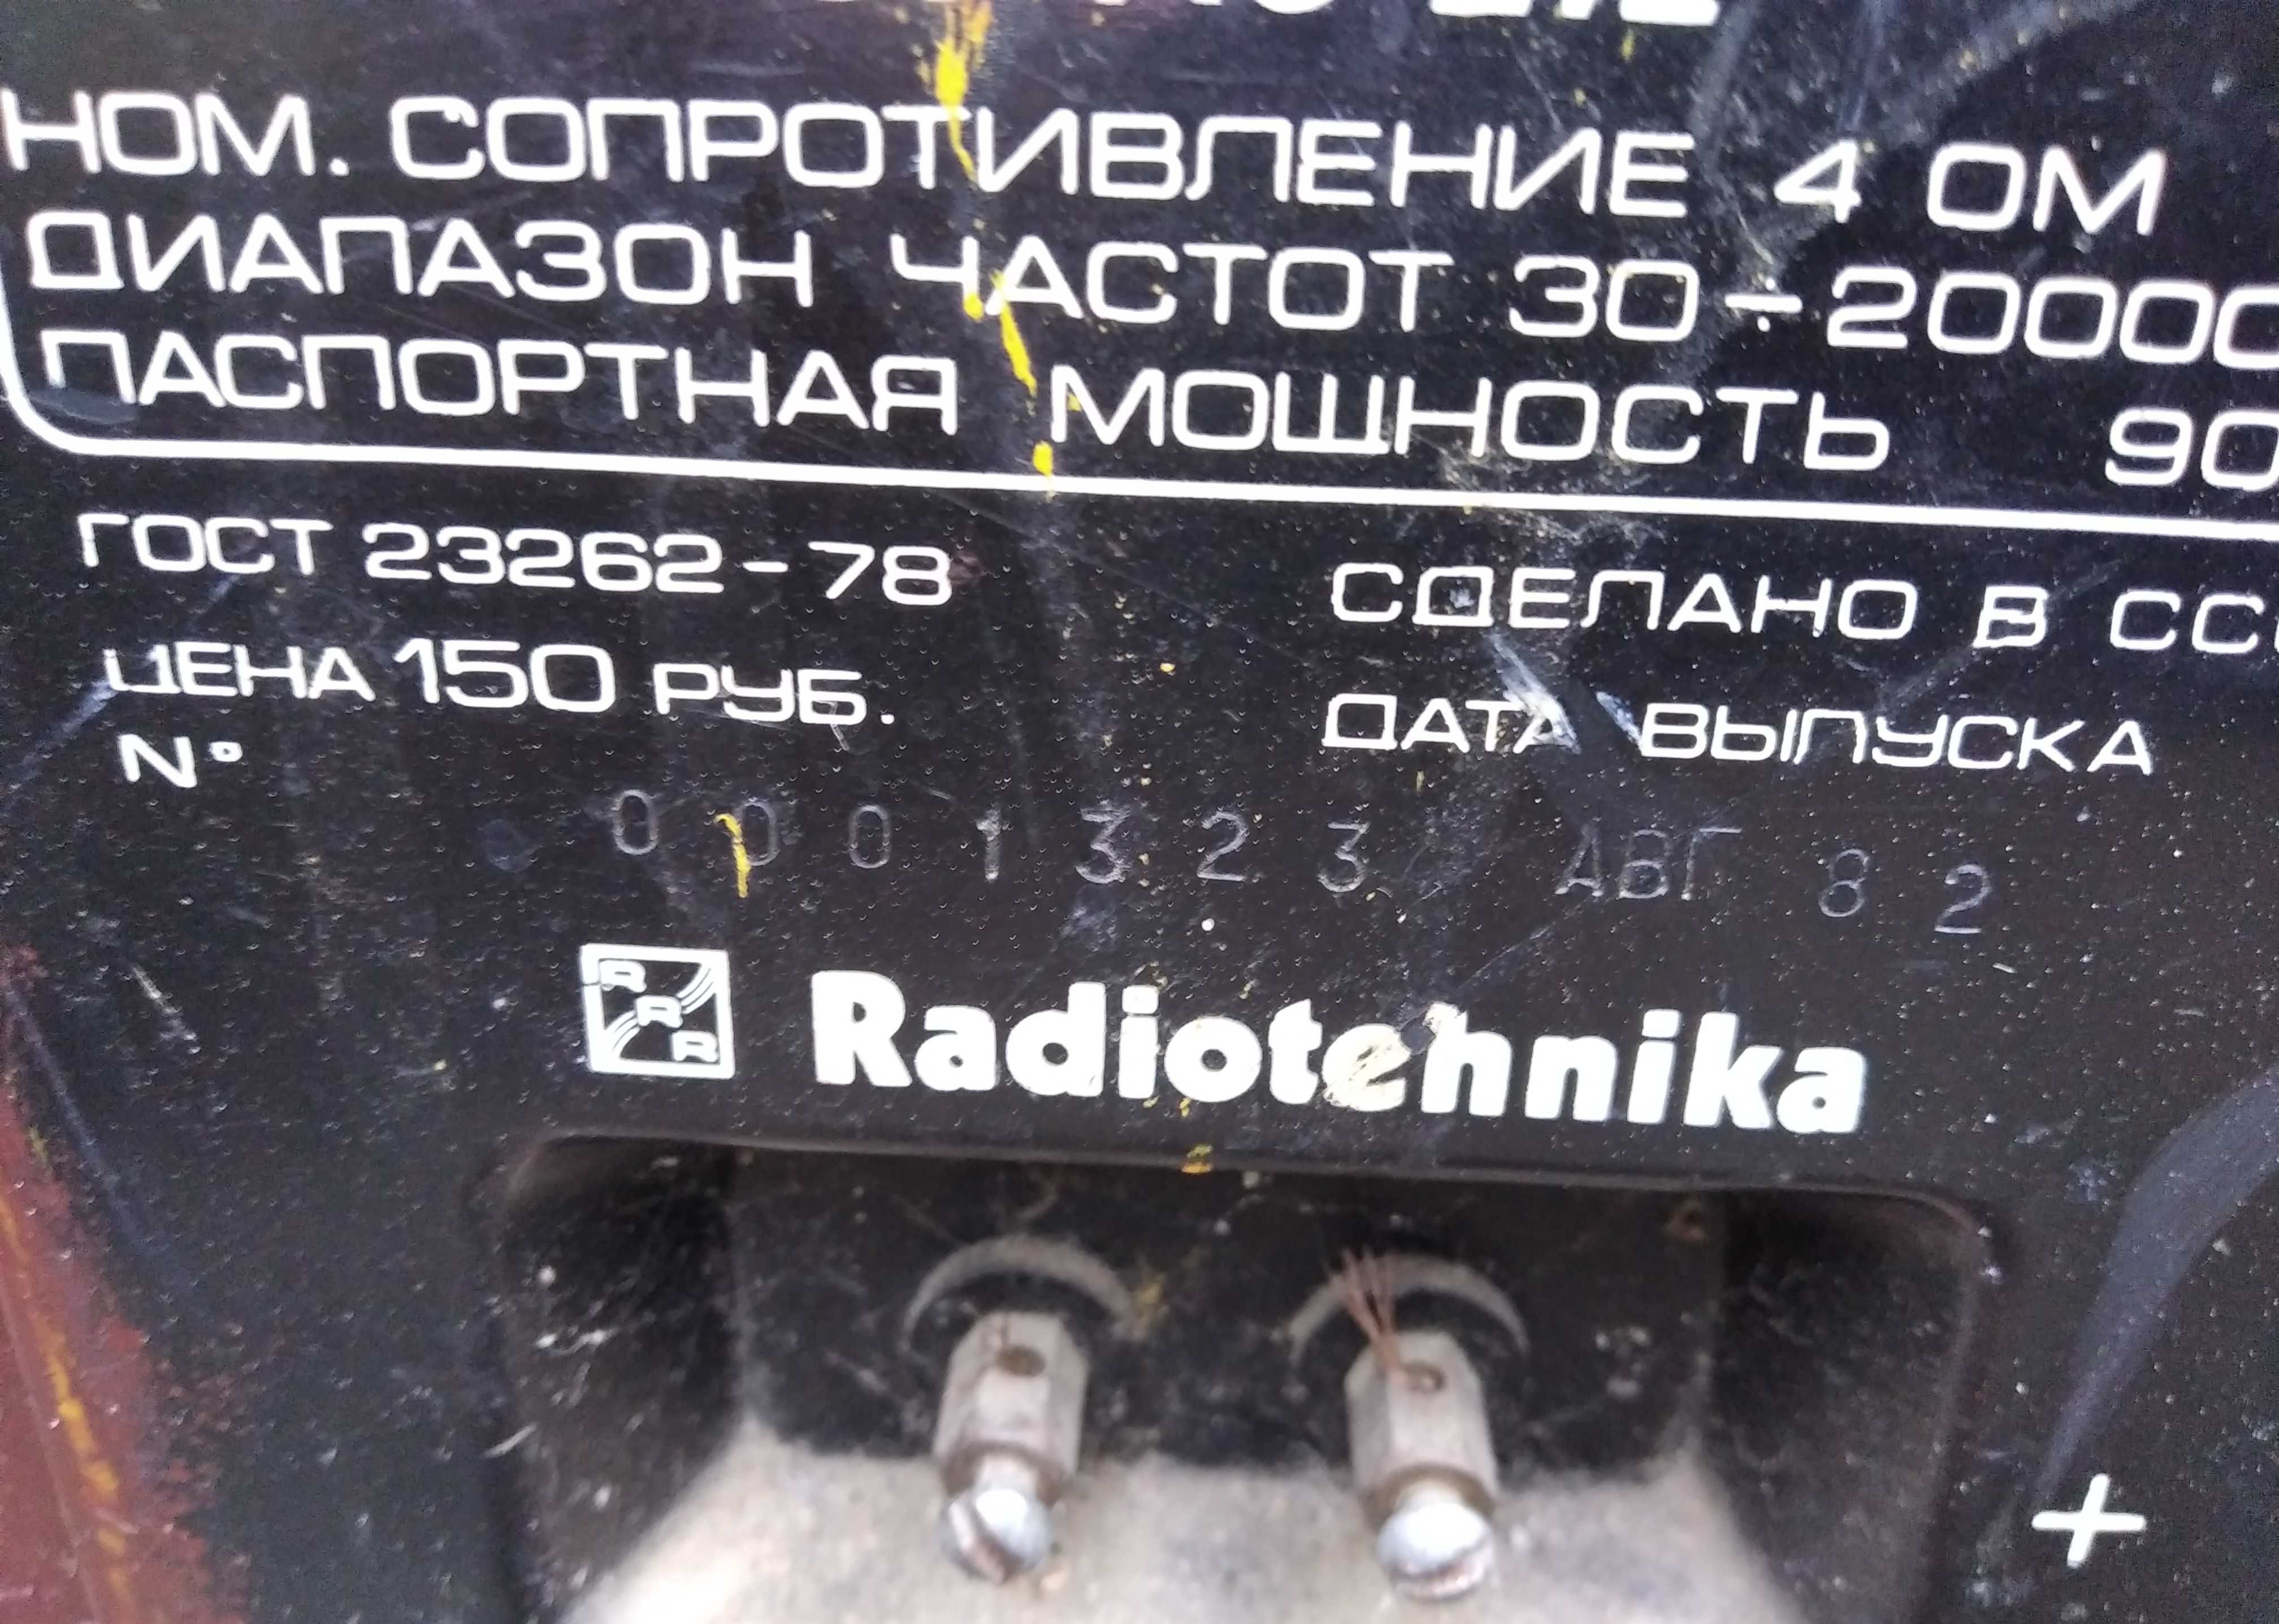 Radiotehnika S-90 3- WAY Speaker System  стерео